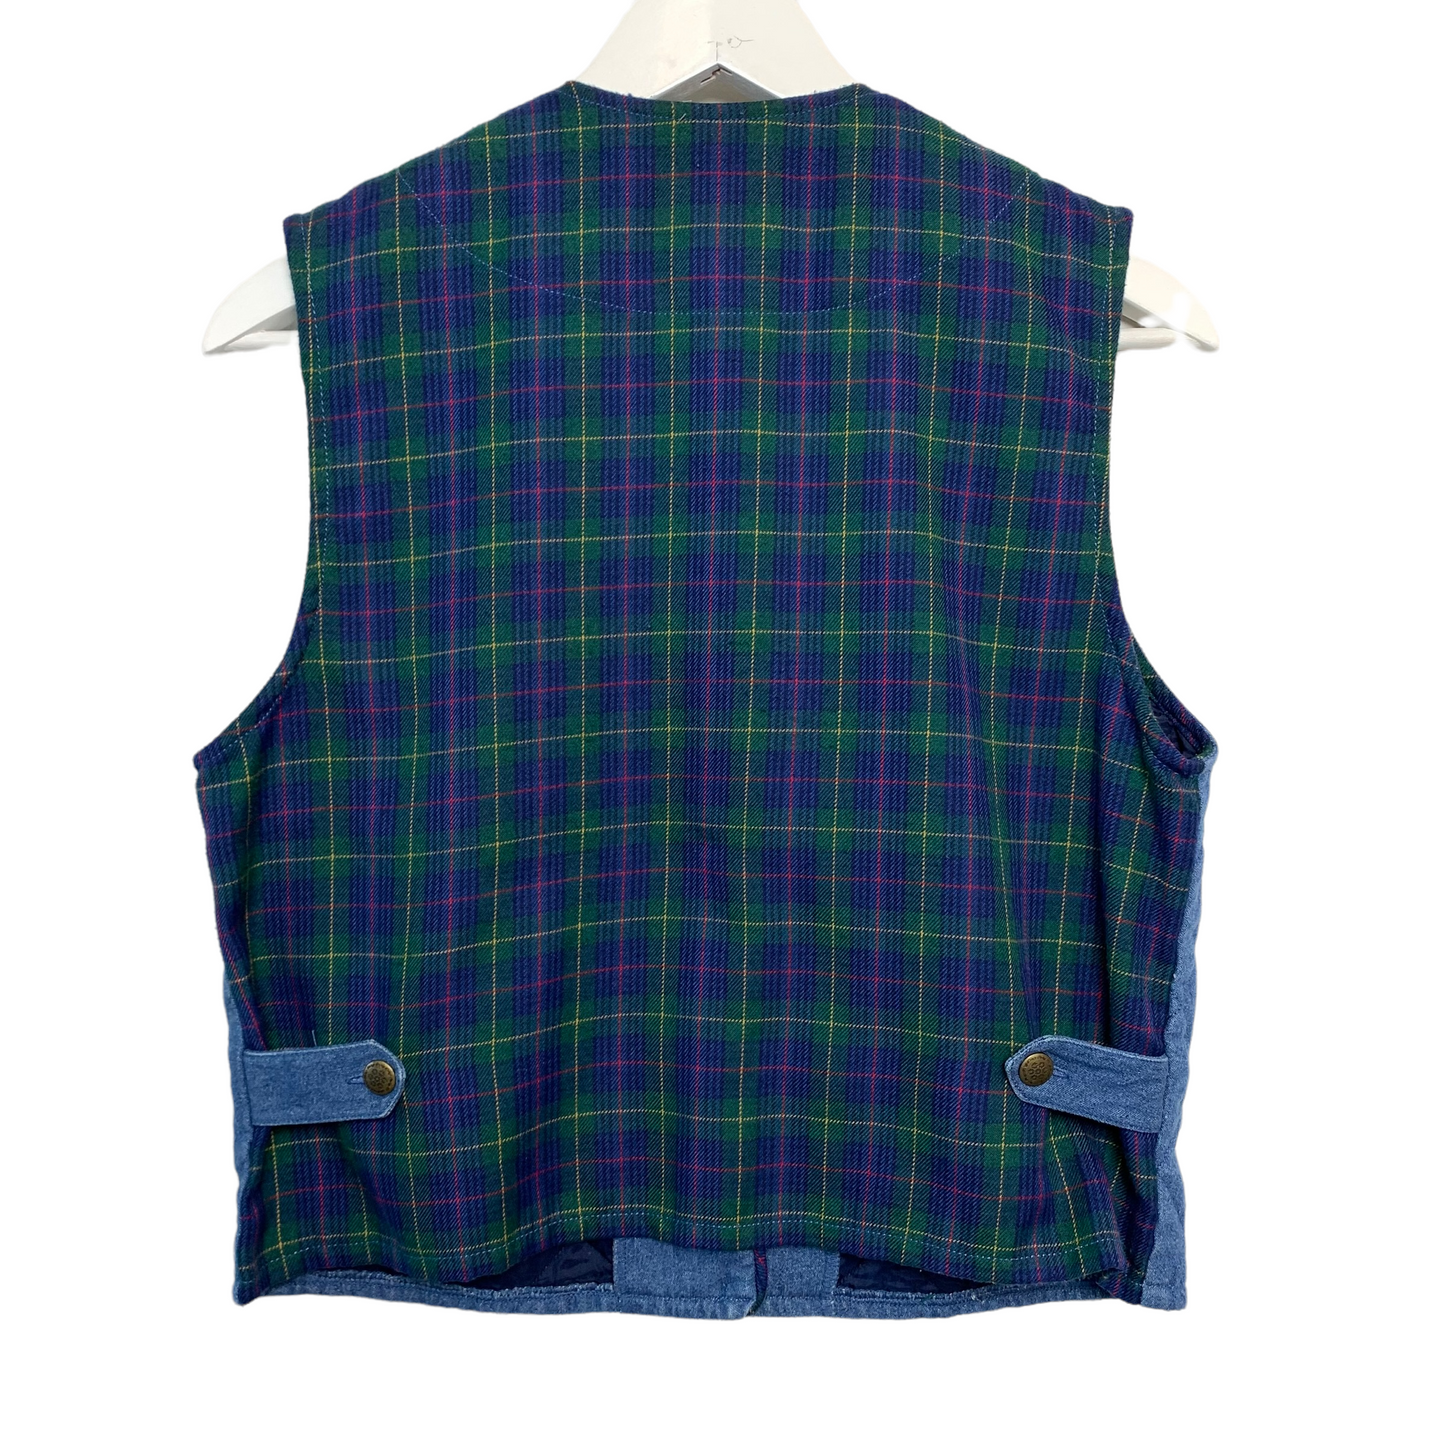 Vintage 90s Koret Denim Quilted Vest with Plaid Small Petite